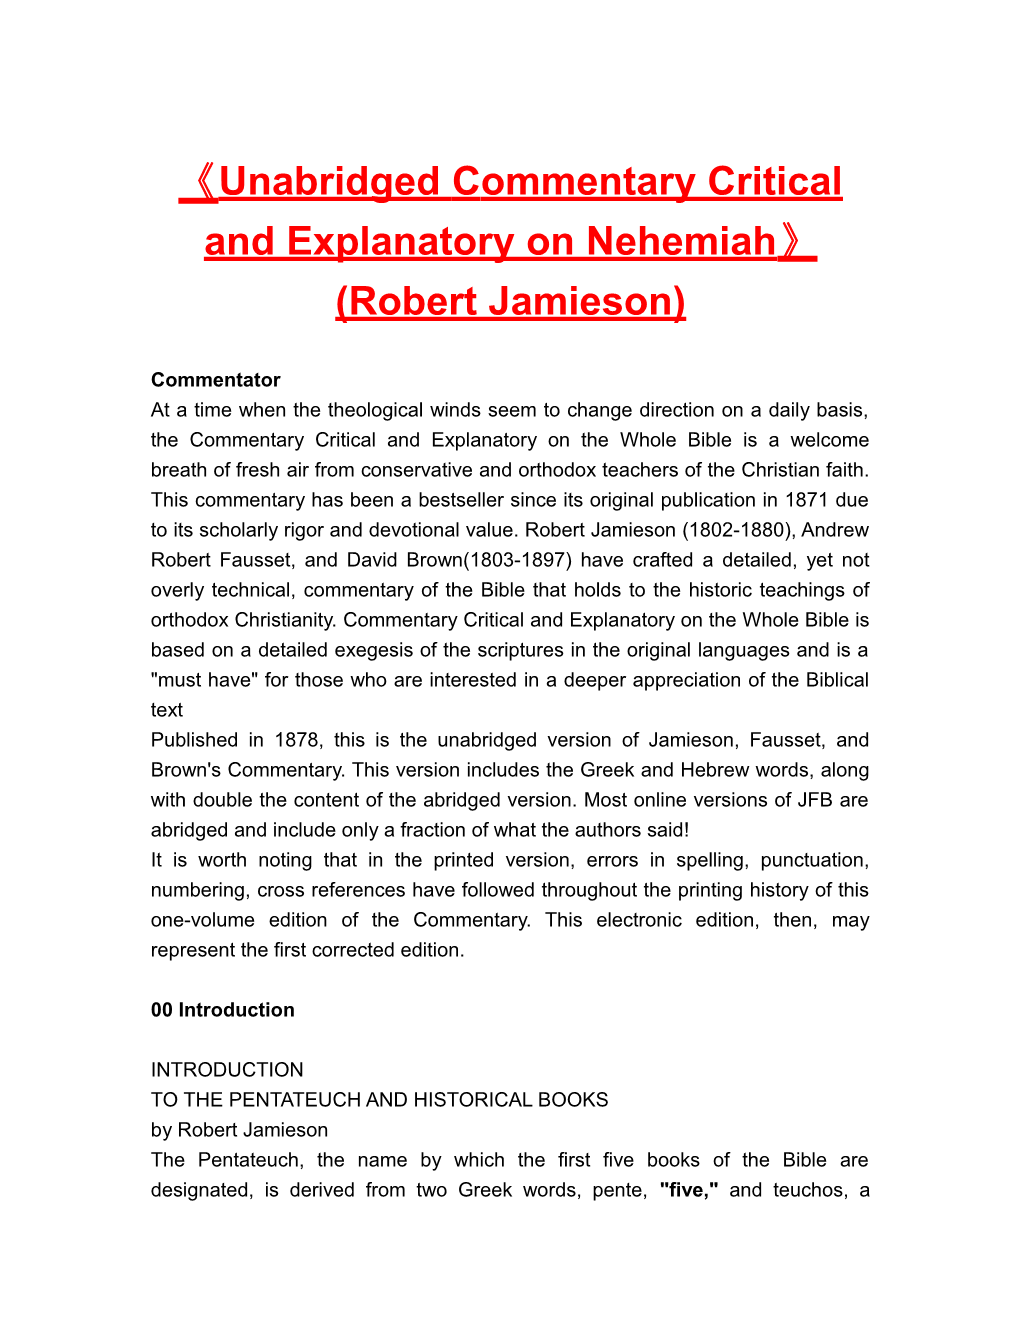 Unabridged Commentary Critical and Explanatory on Nehemiah (Robert Jamieson)